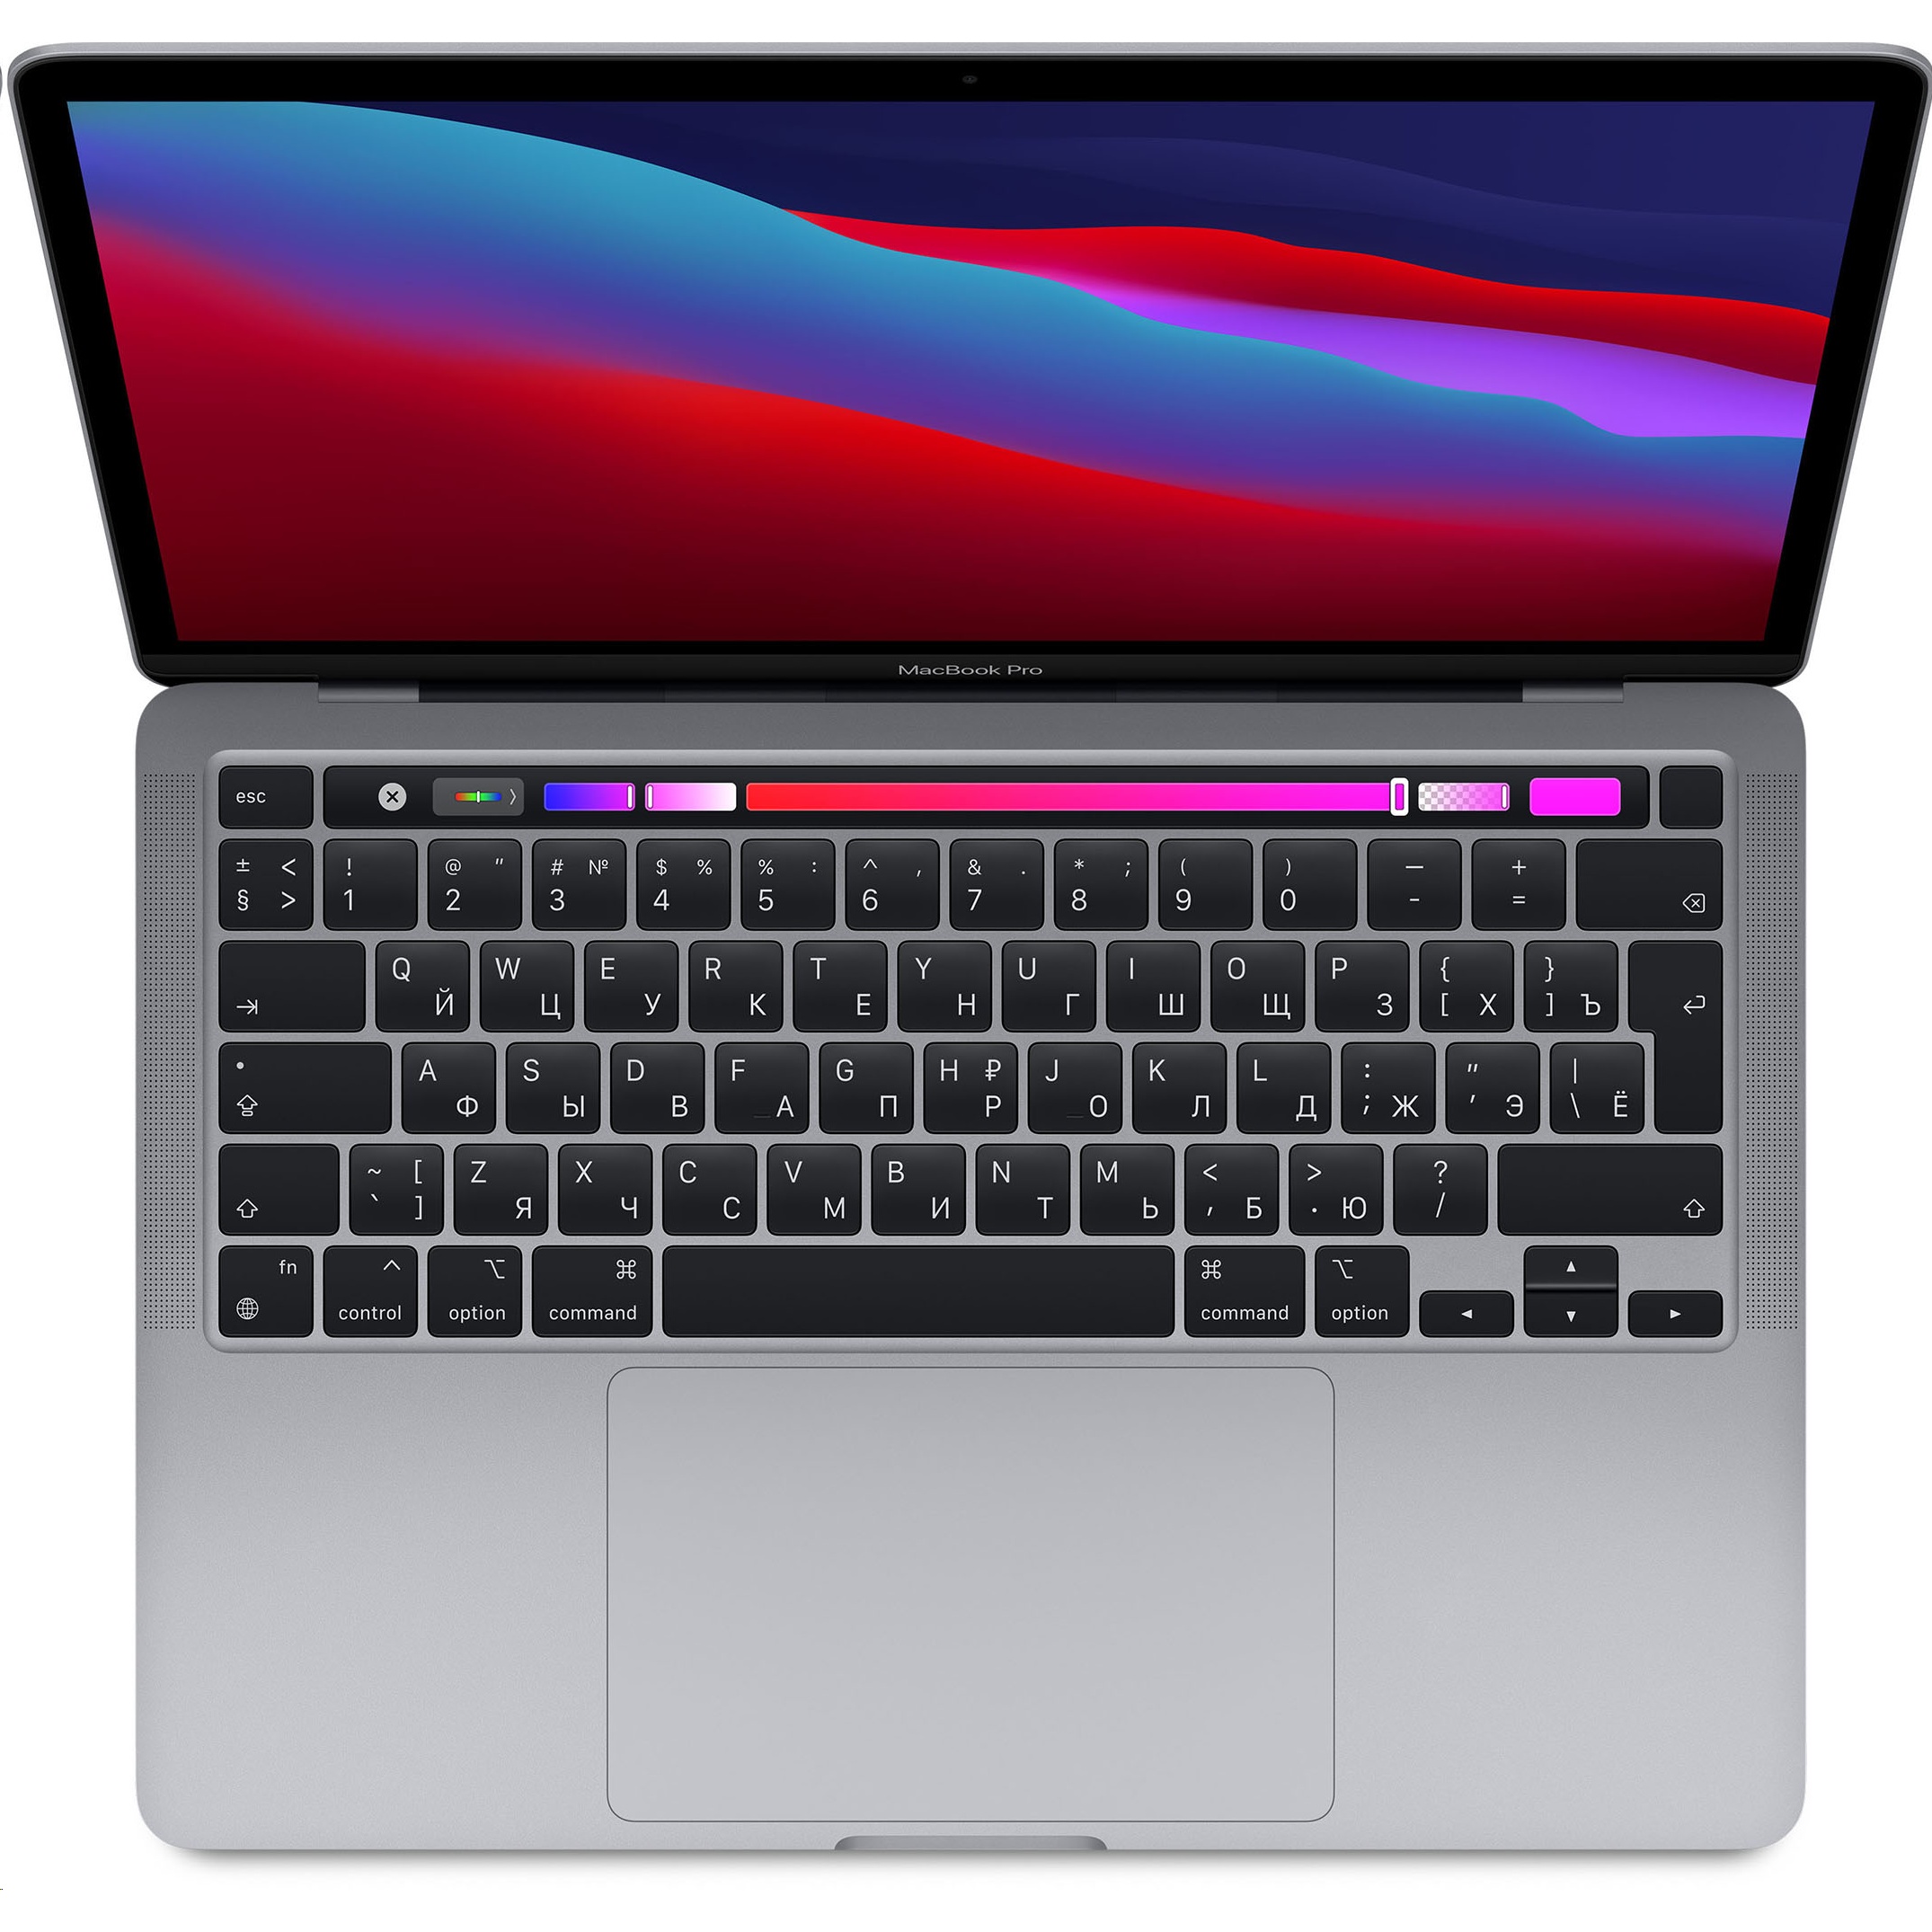 Certified Refurbished Apple MacBook Pro Core M1 8GB Ram 256GB SSD 13.3 inch Display 2020-2021